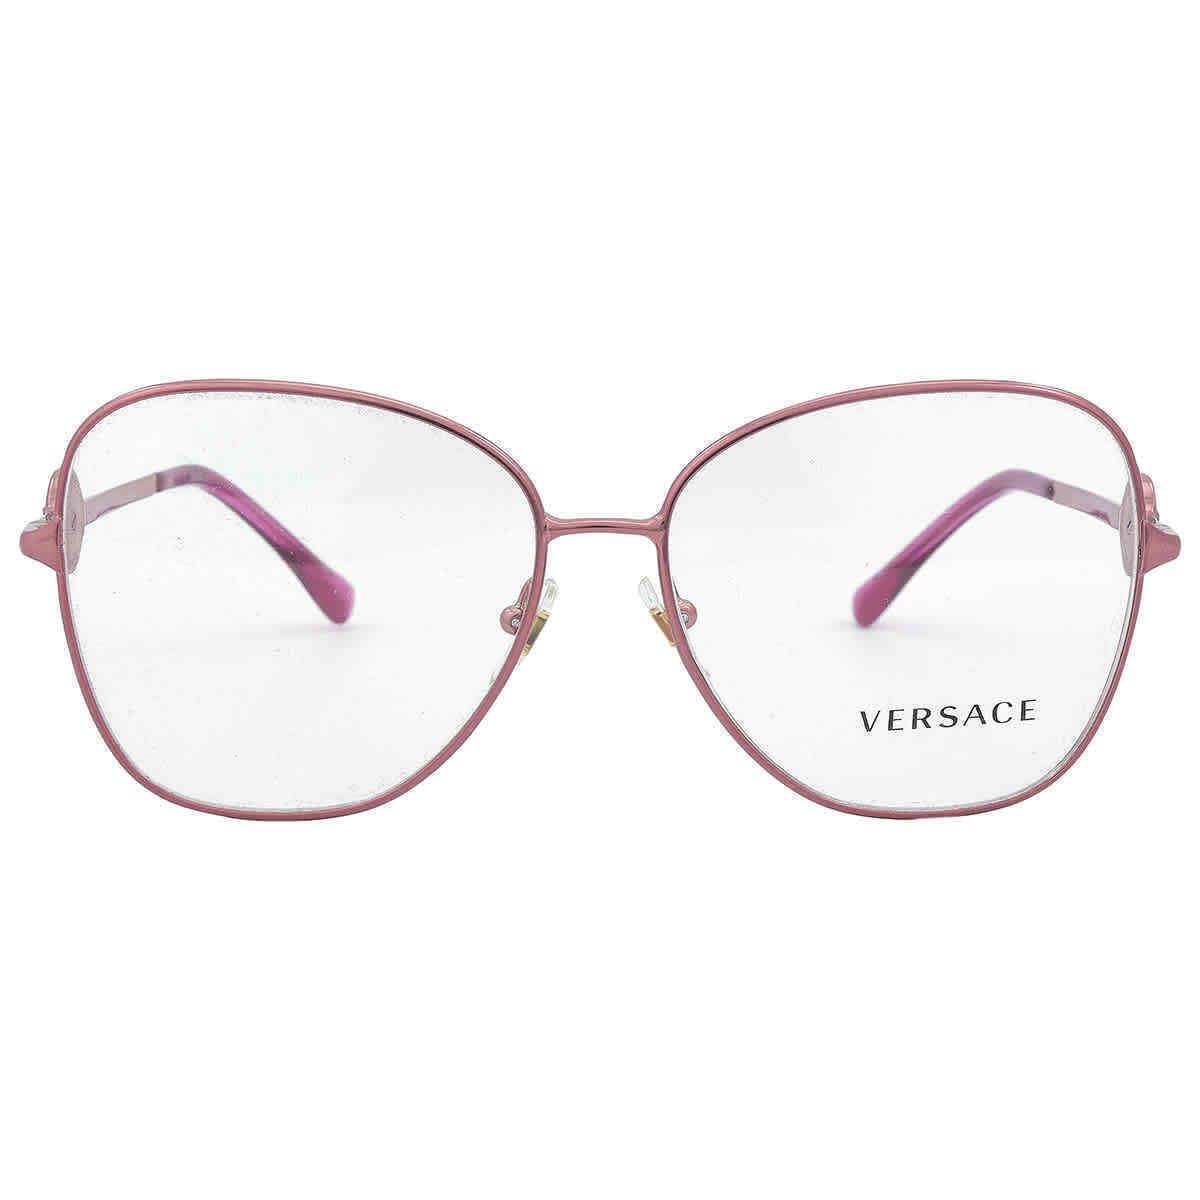 Versace Eyeglasses VE1289 1500 55mm Matallized Pink / Demo Lens